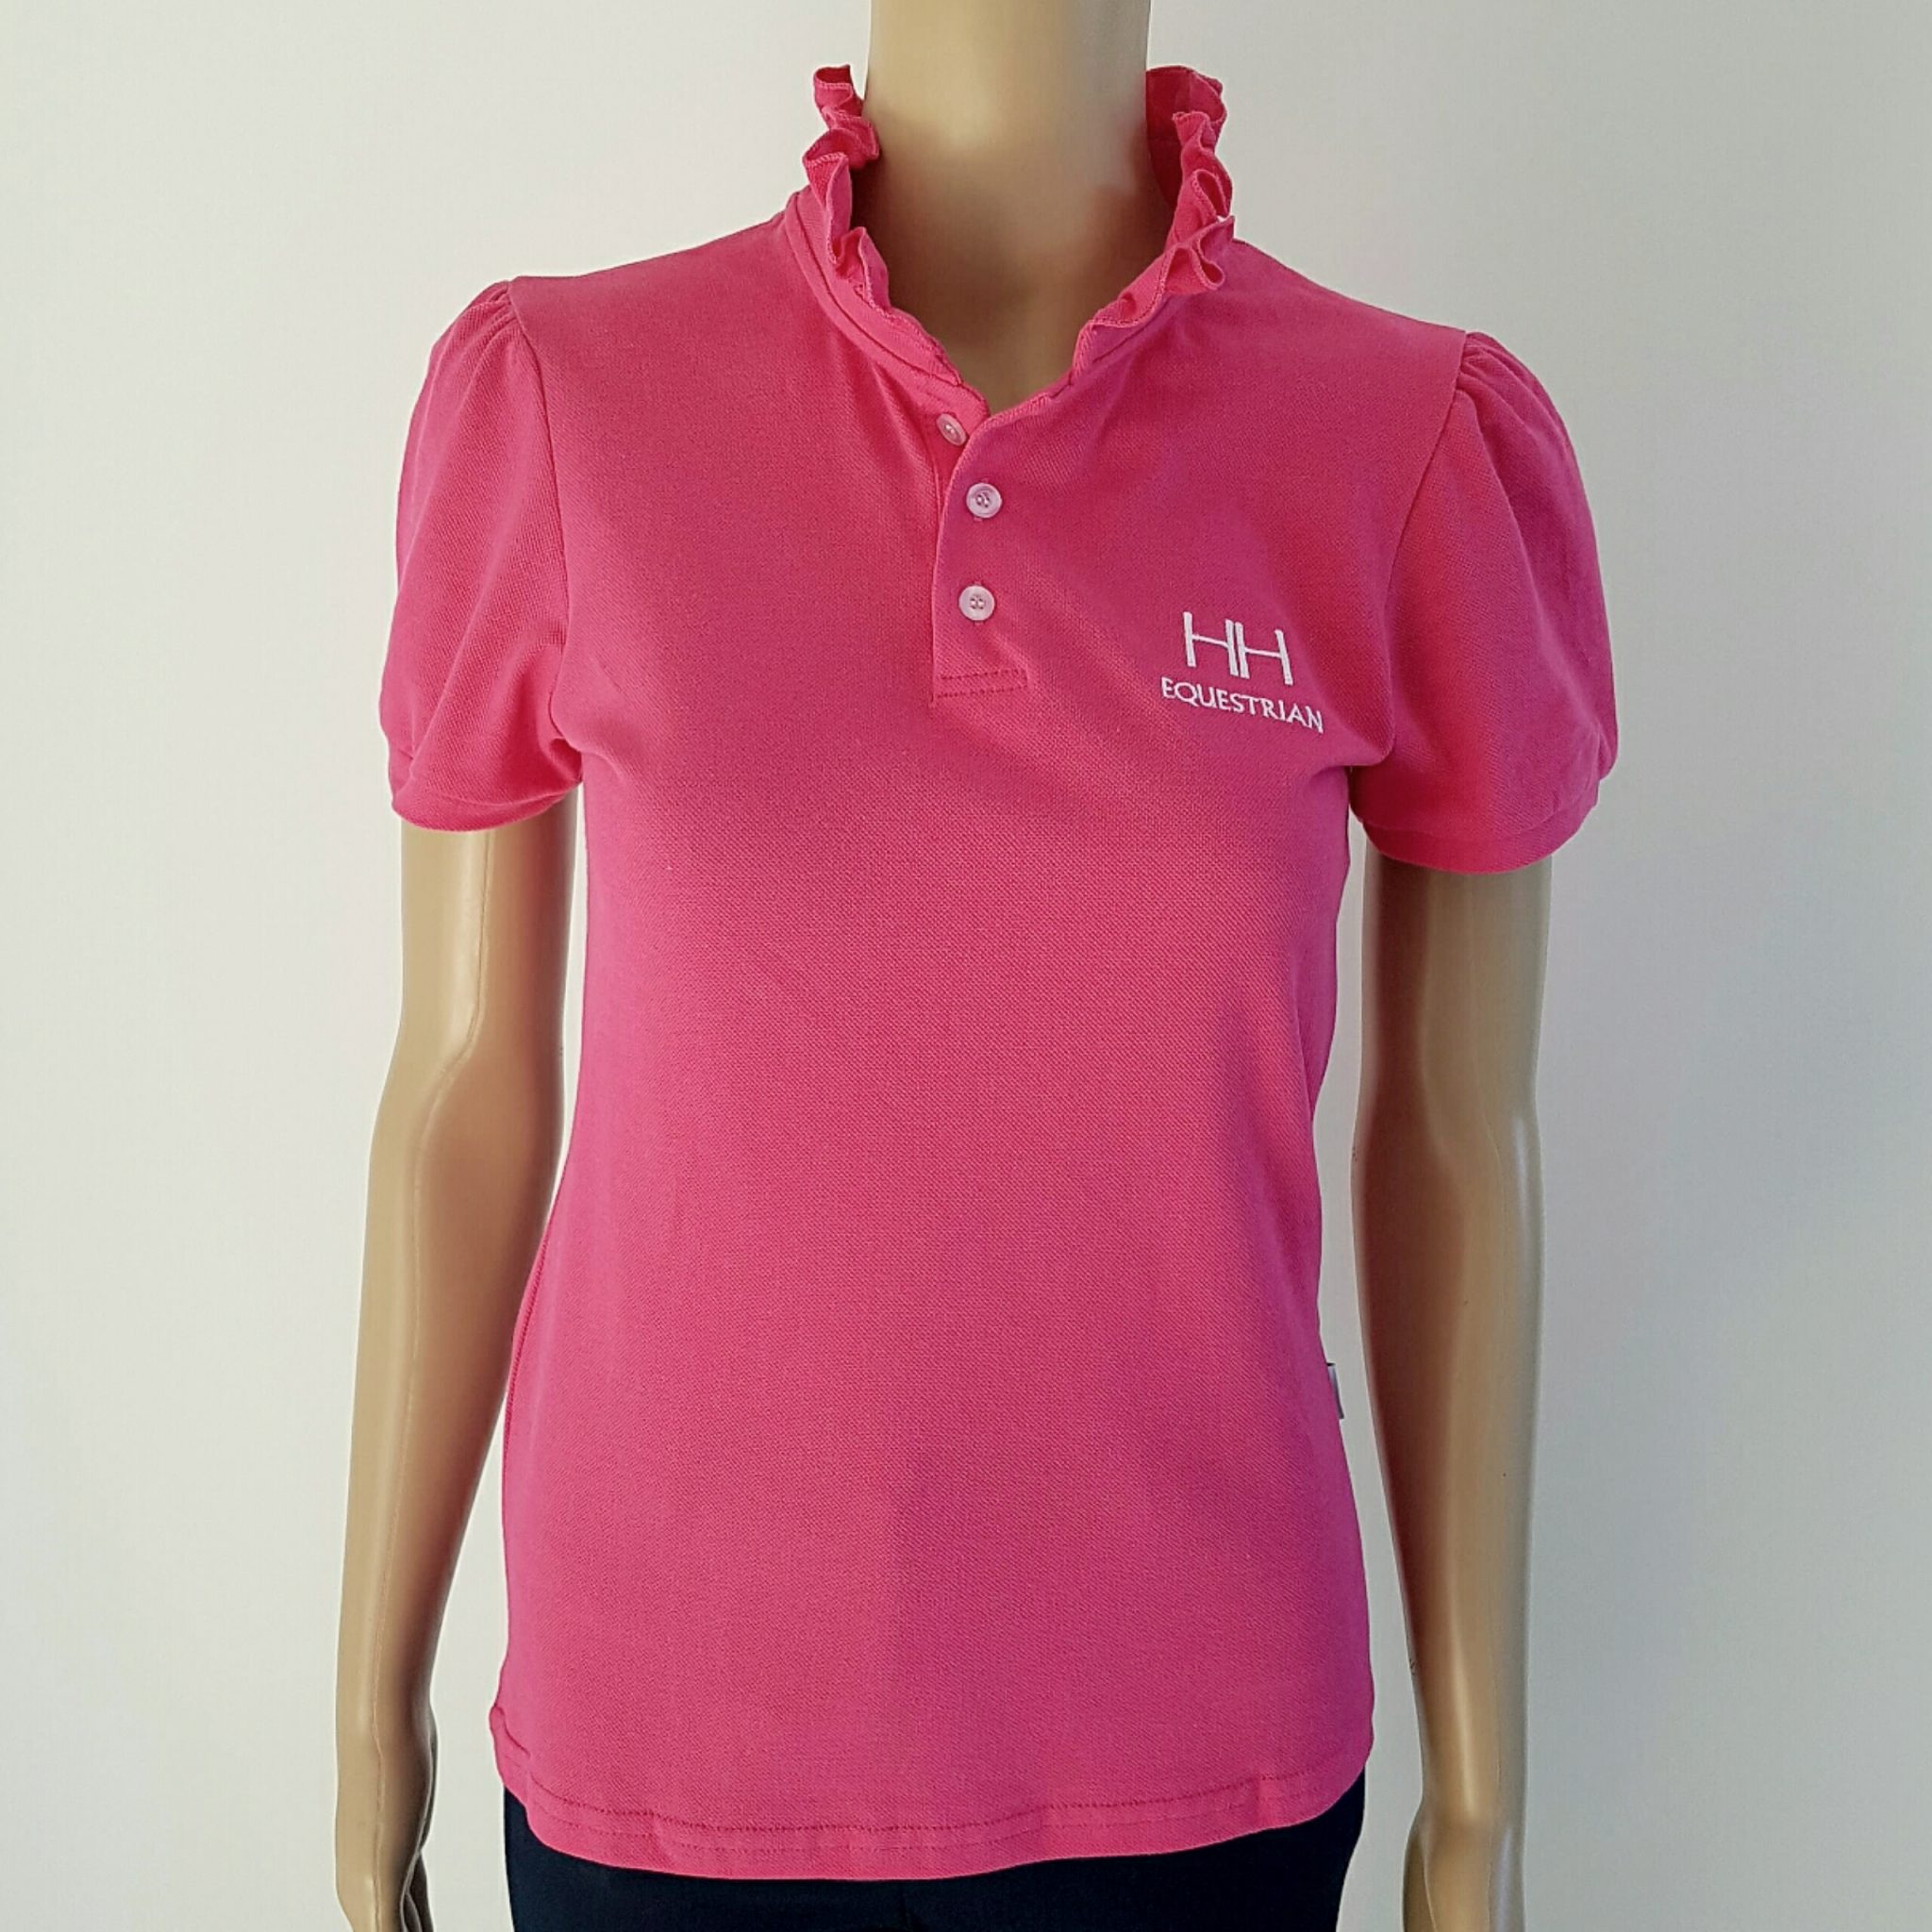 Ladies Polo Shirt Pink